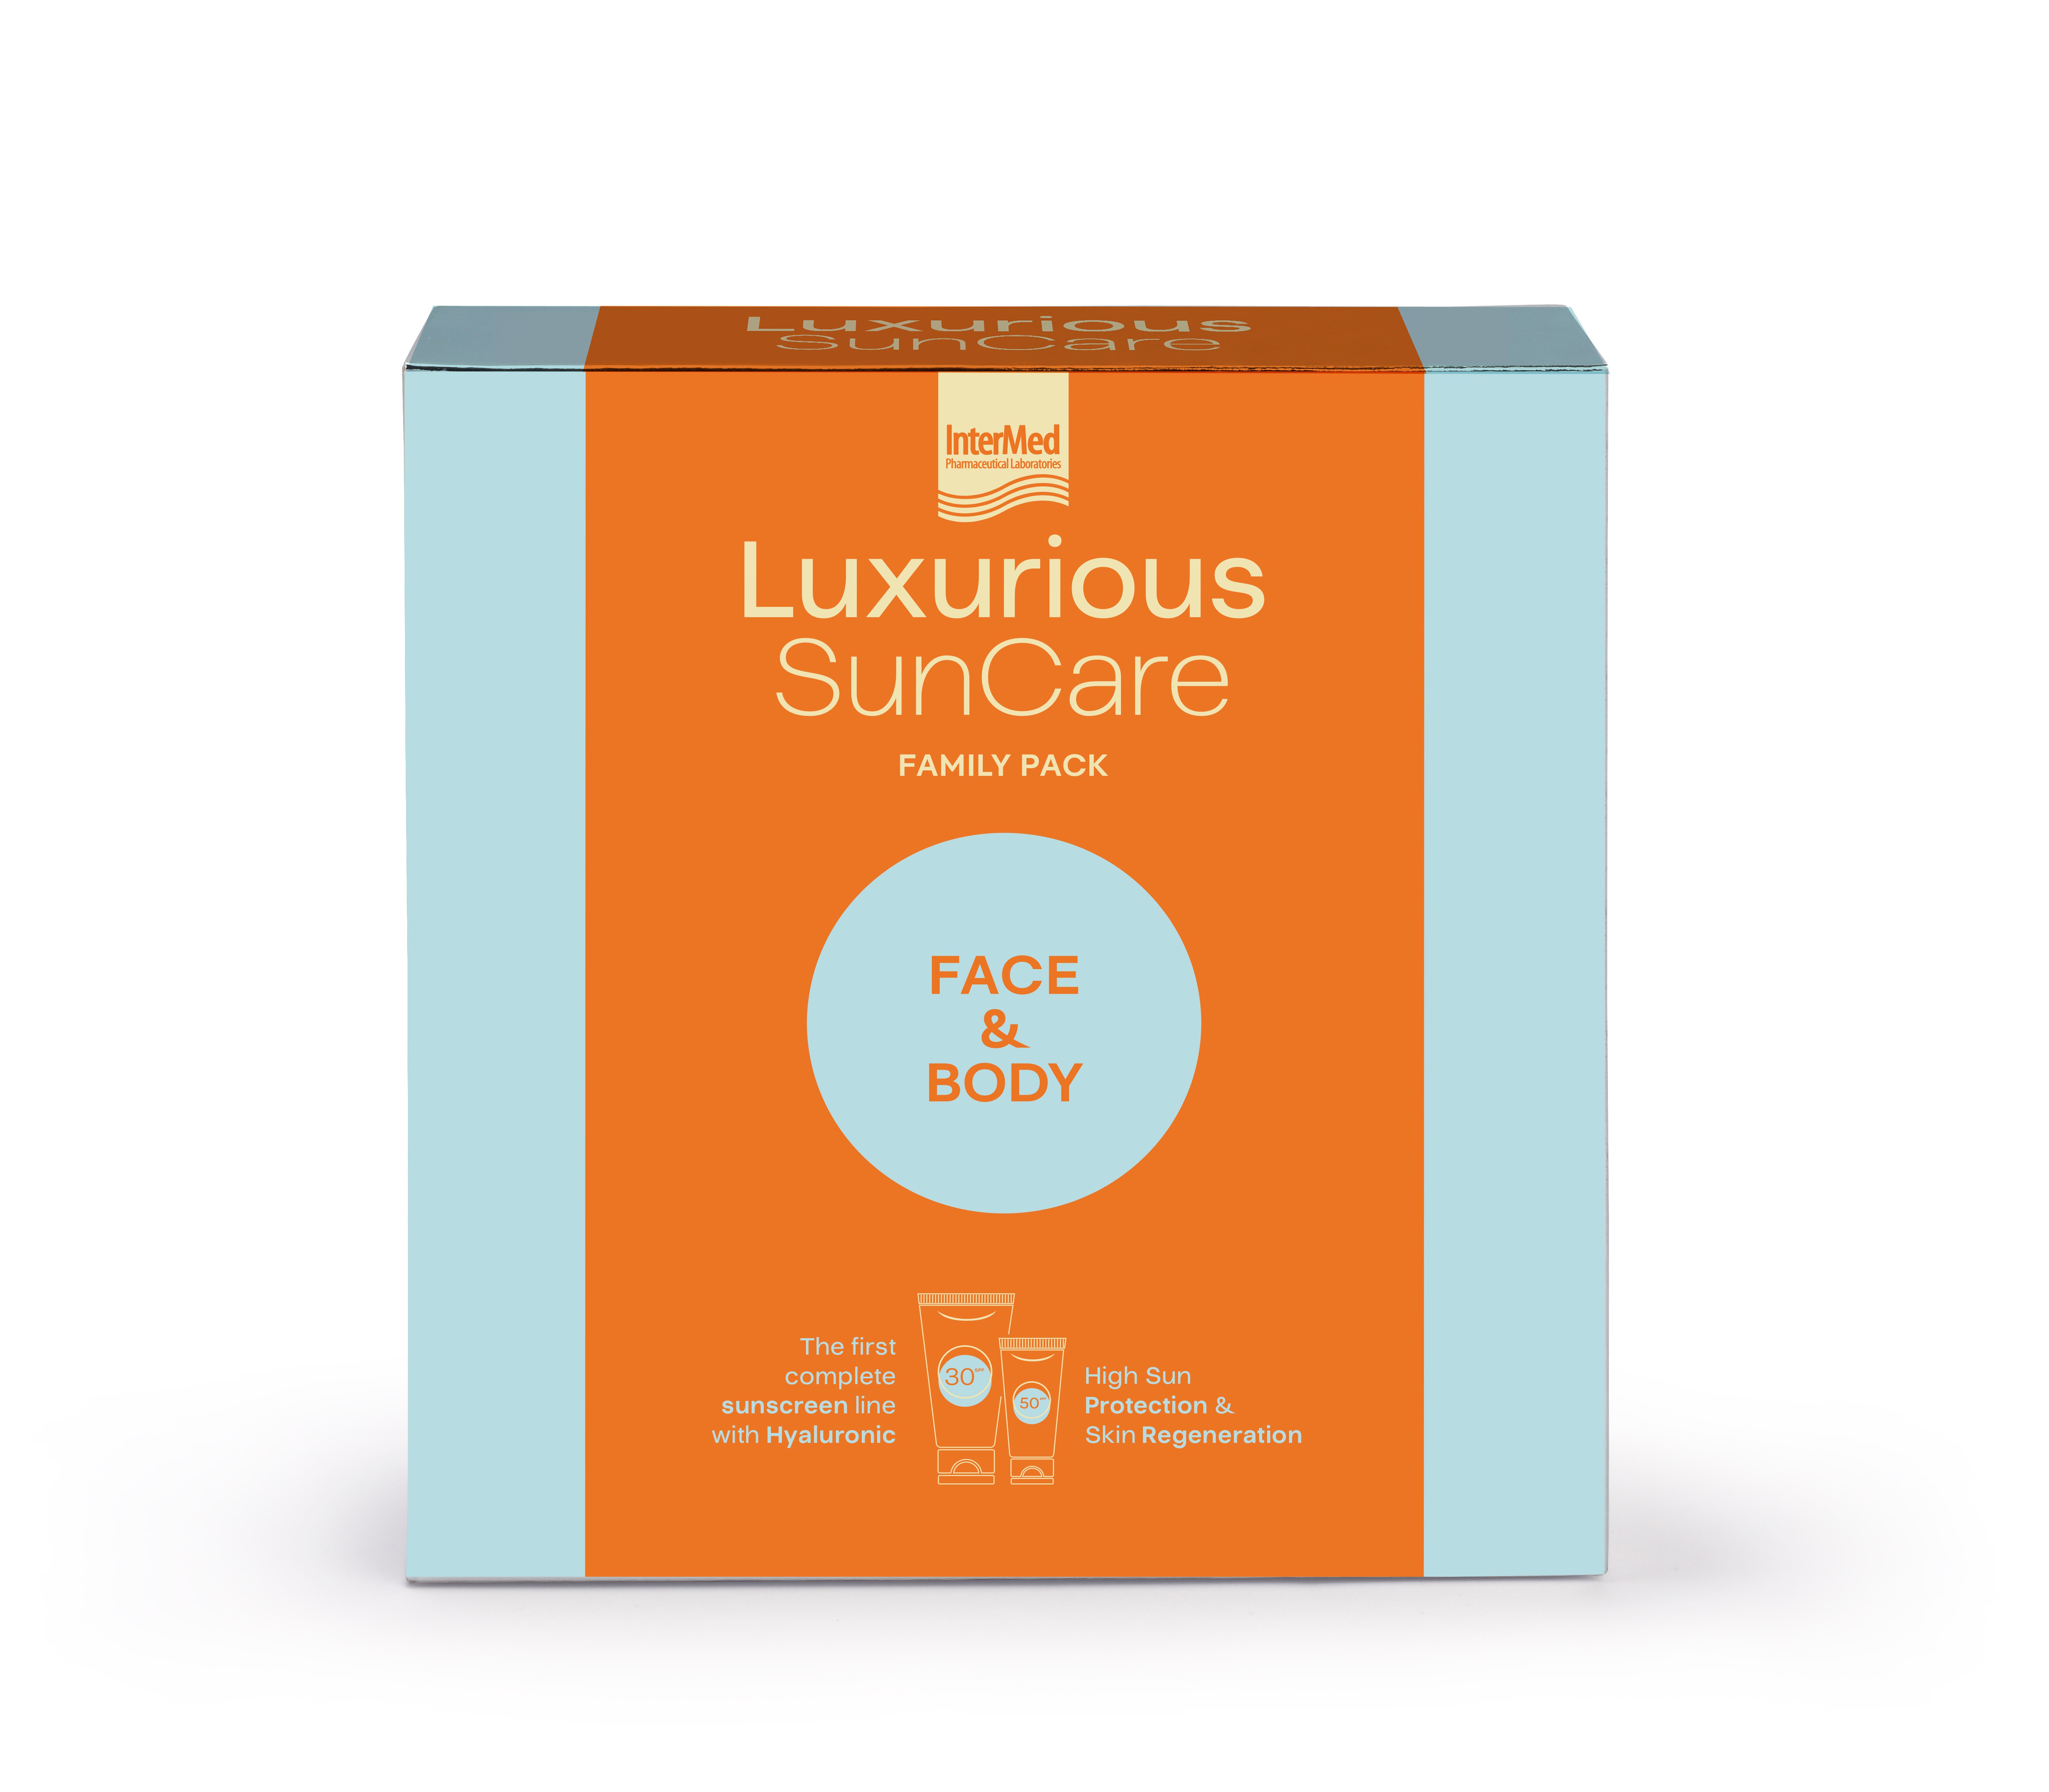 Luxurious Sun Care Pack Face & Body Body 30spf - Face 50spf